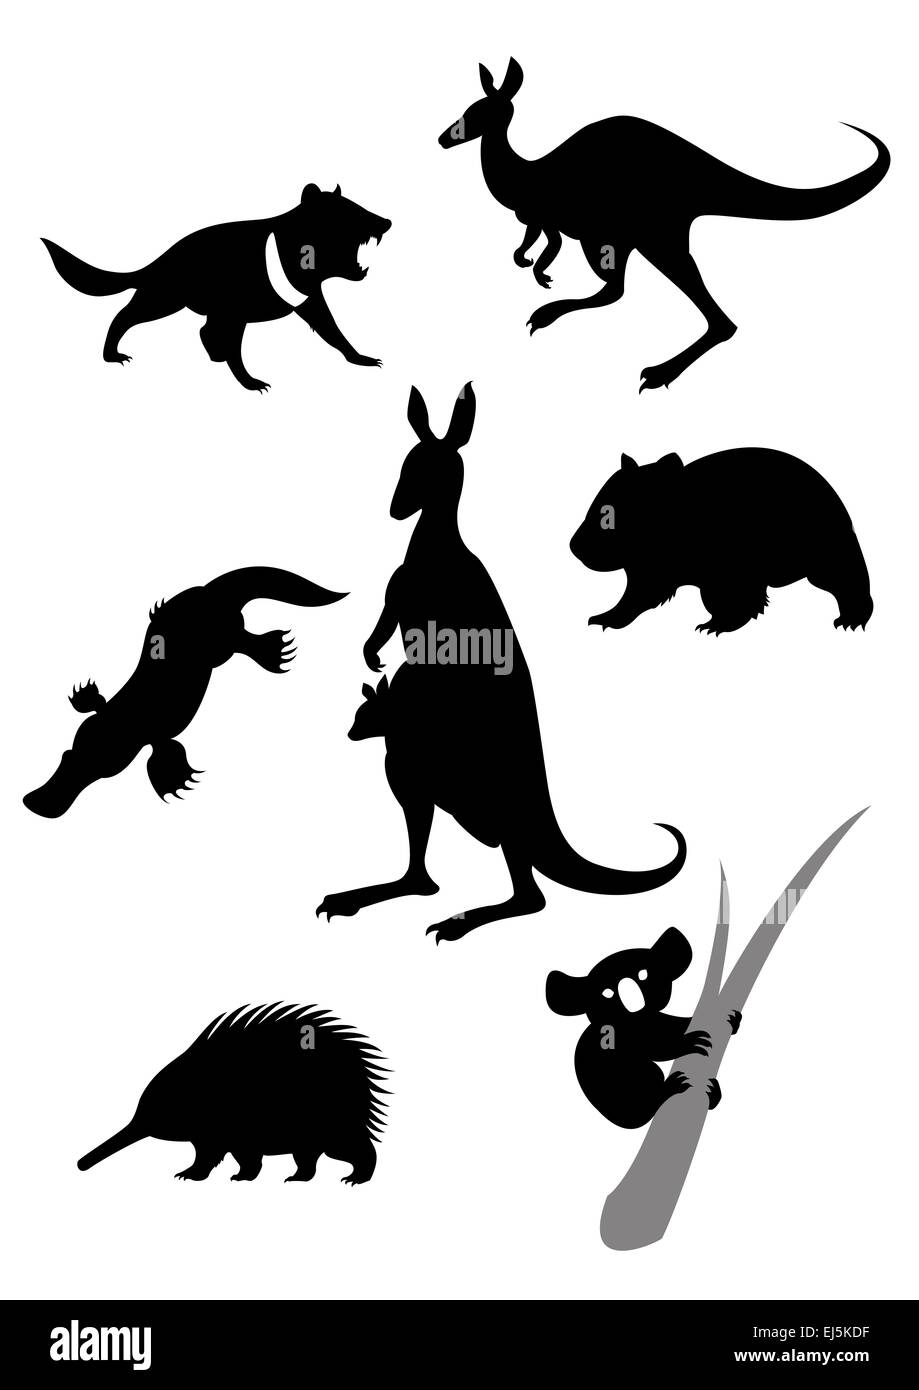 Vector image of silhouettes of australian animals Stock Photo